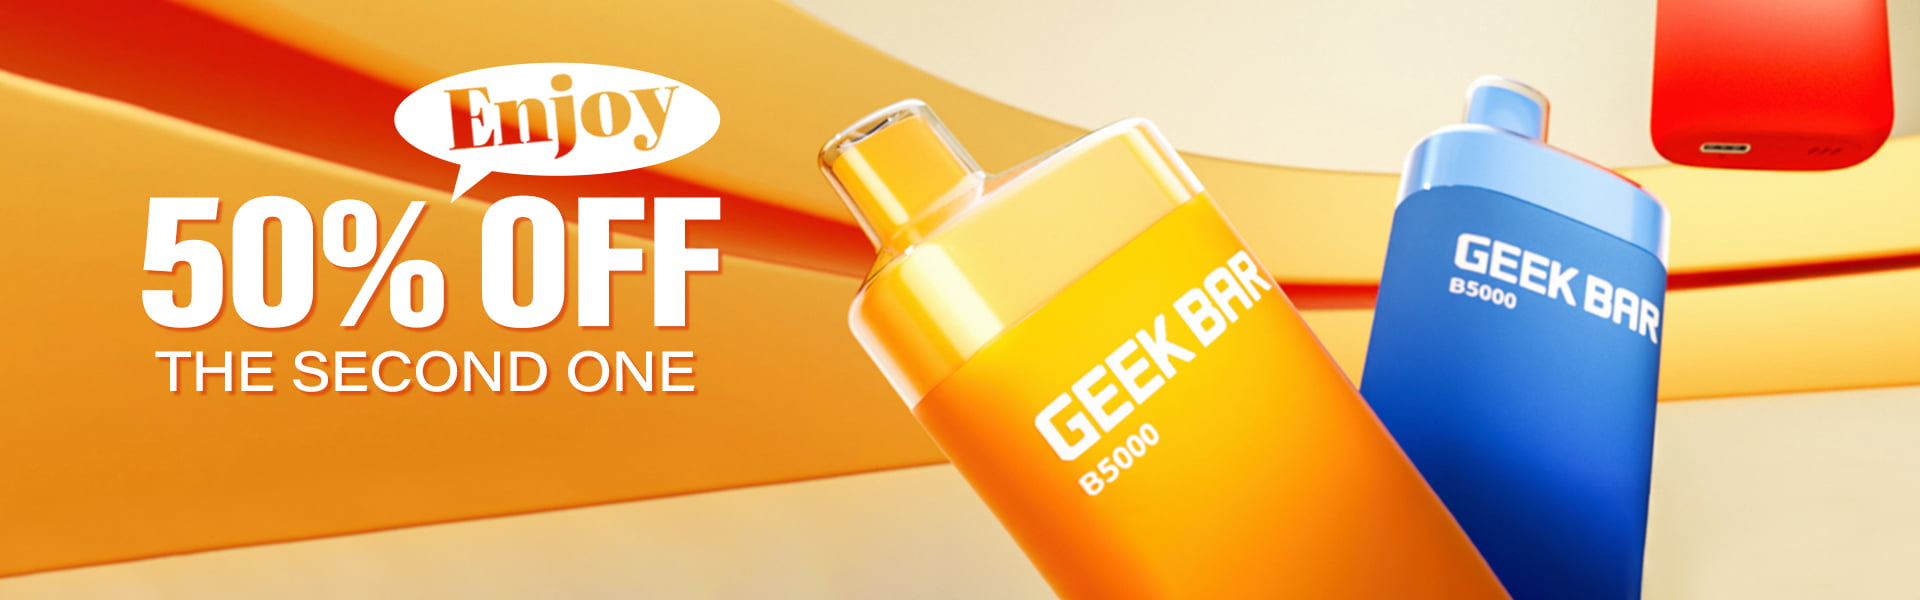 Geekbar X5000 FDisposable Vape Box with Best Price at Mistvapor Online Vape Store